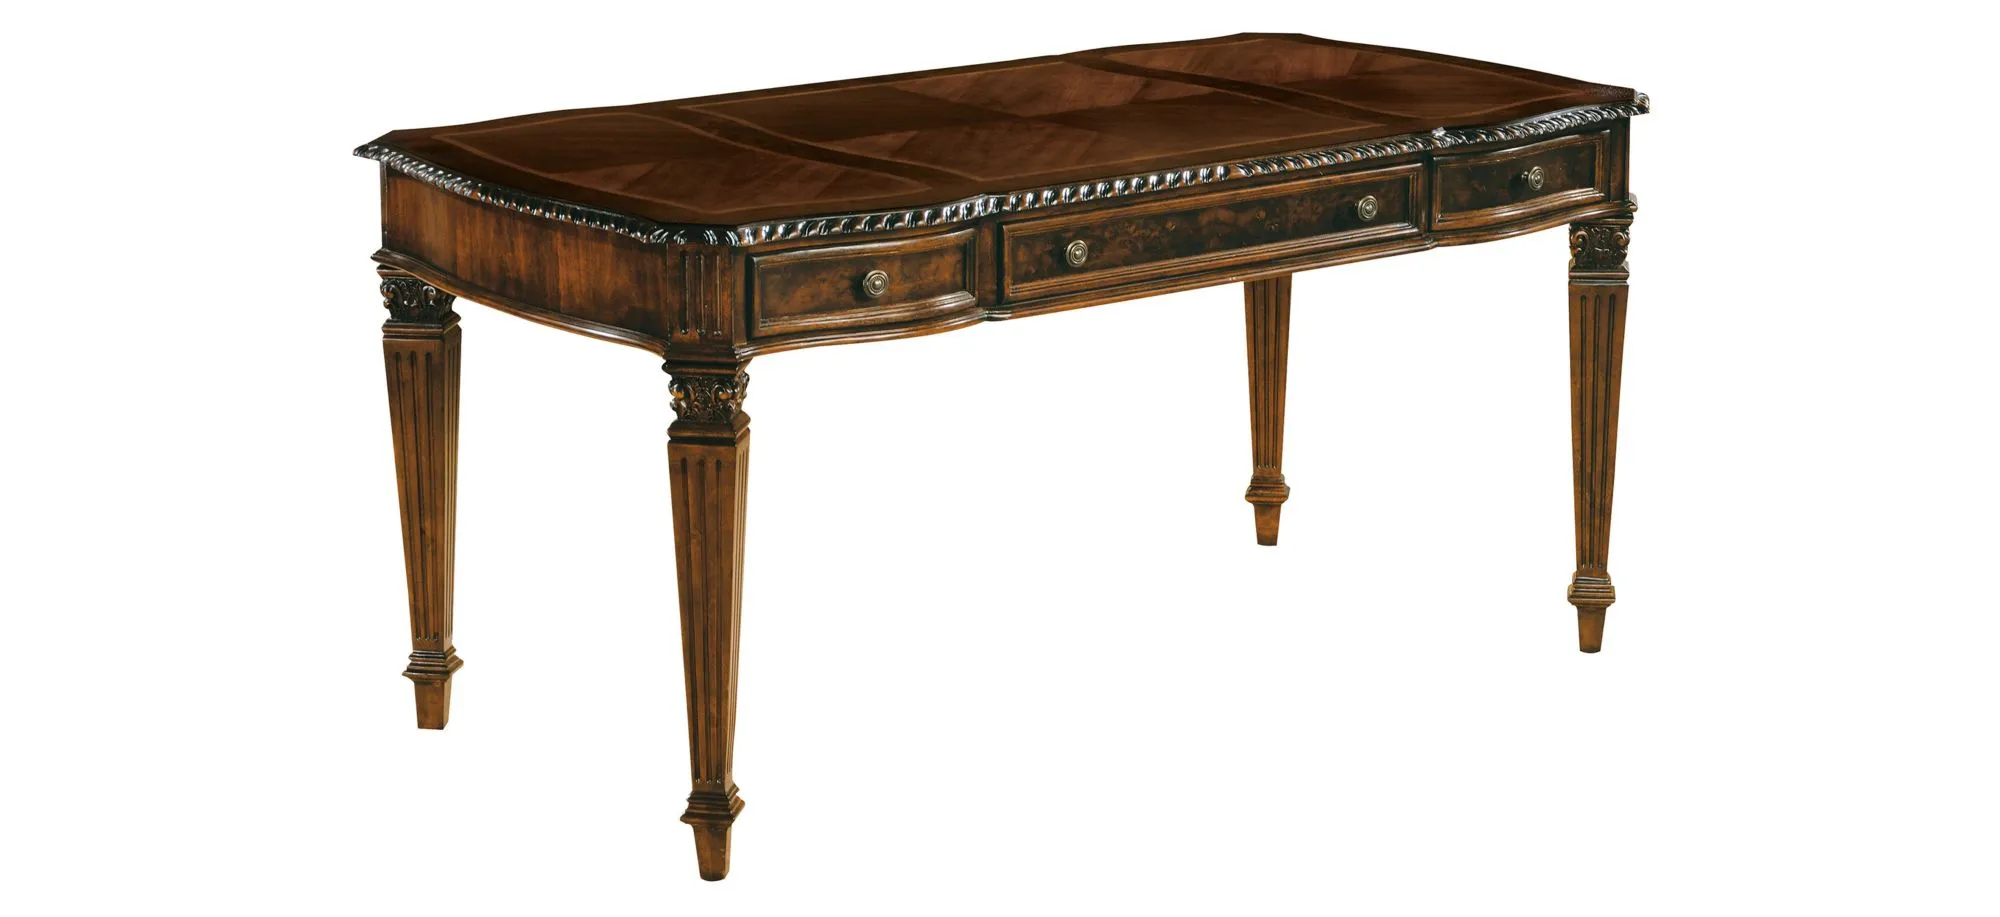 Hekman Desk in OLD WORLD WALNUT BURL by Hekman Furniture Company